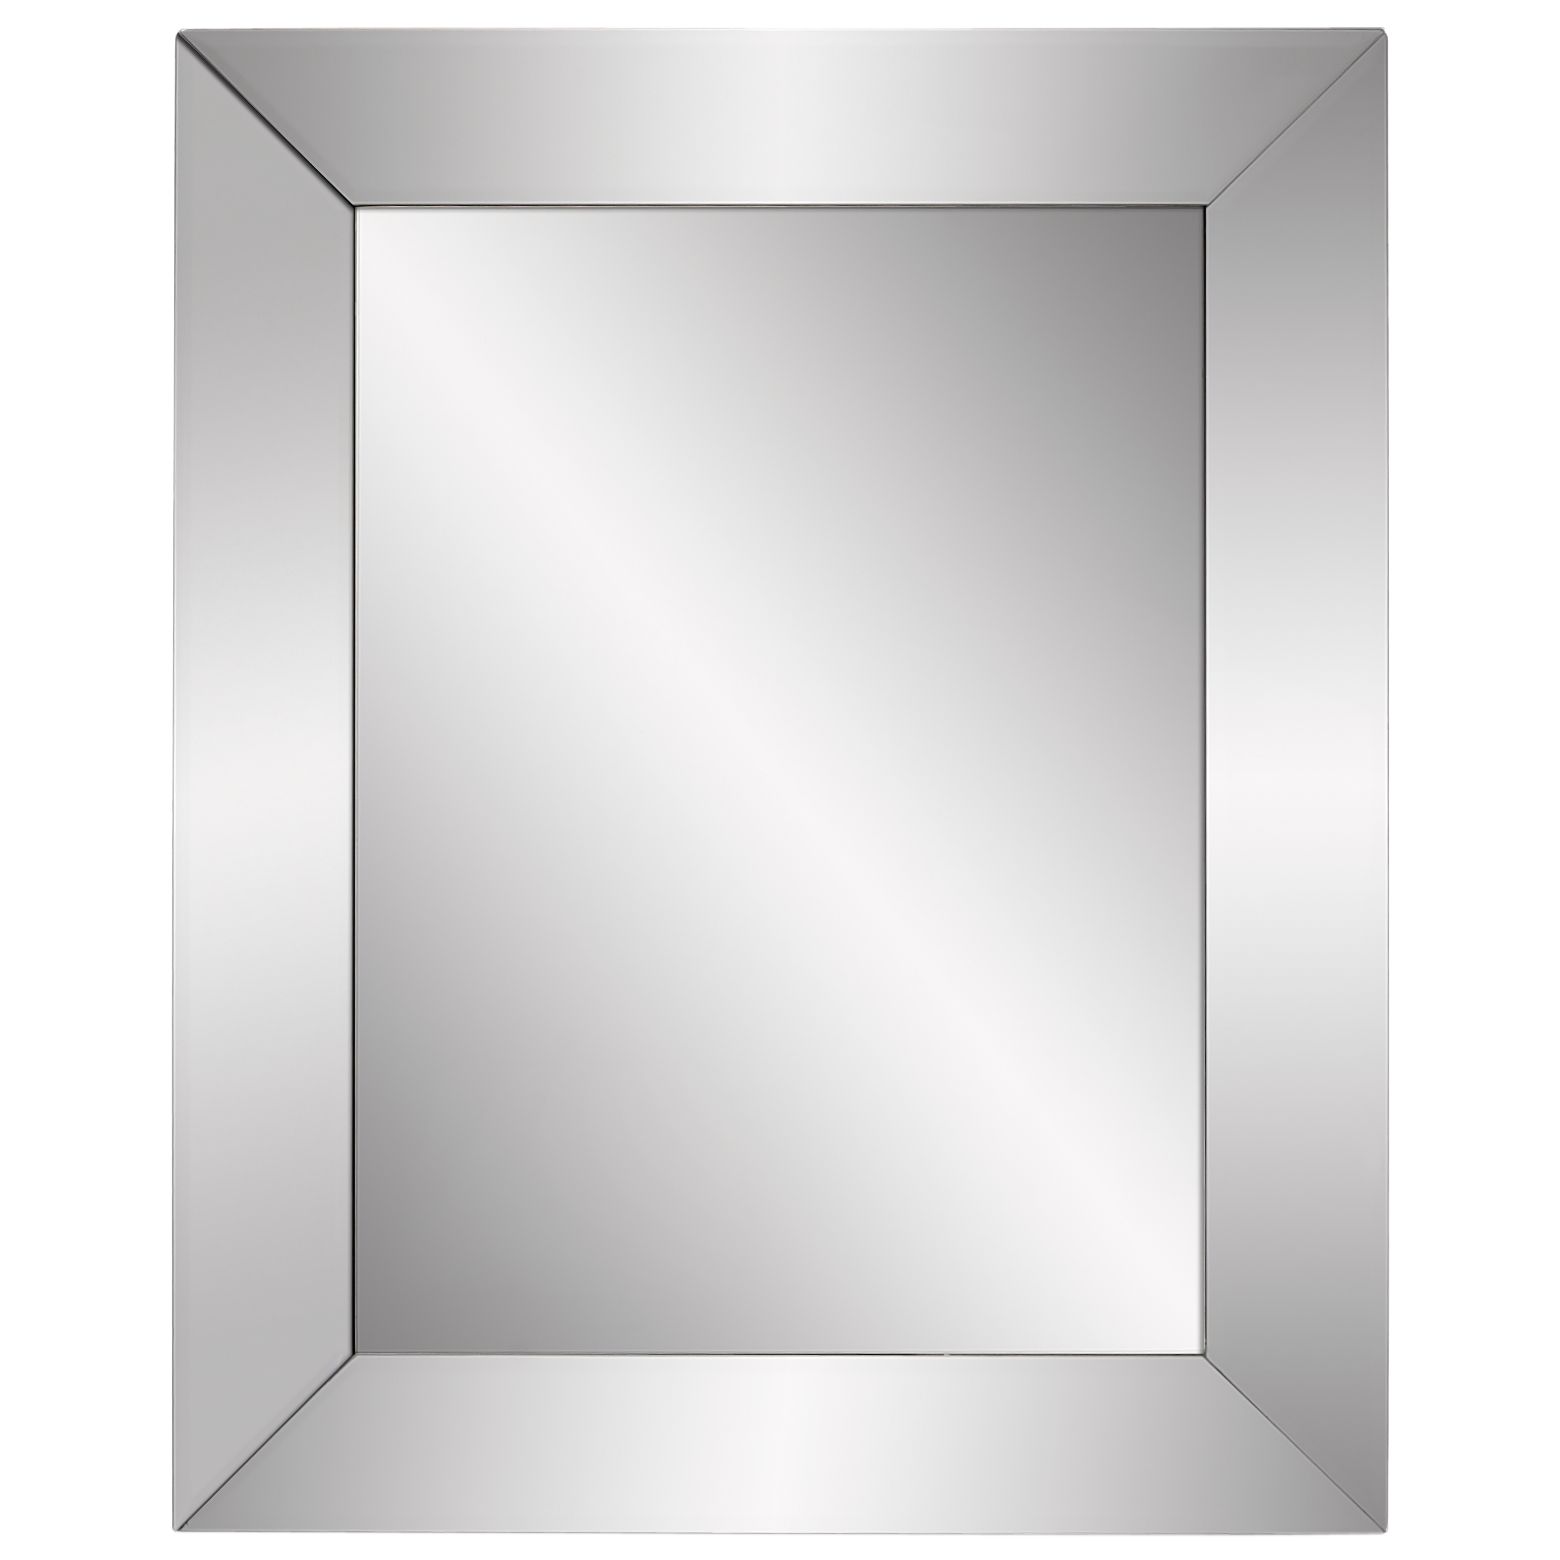 John Lewis Bevel Simple Mirror, Small, H50 x W40cm